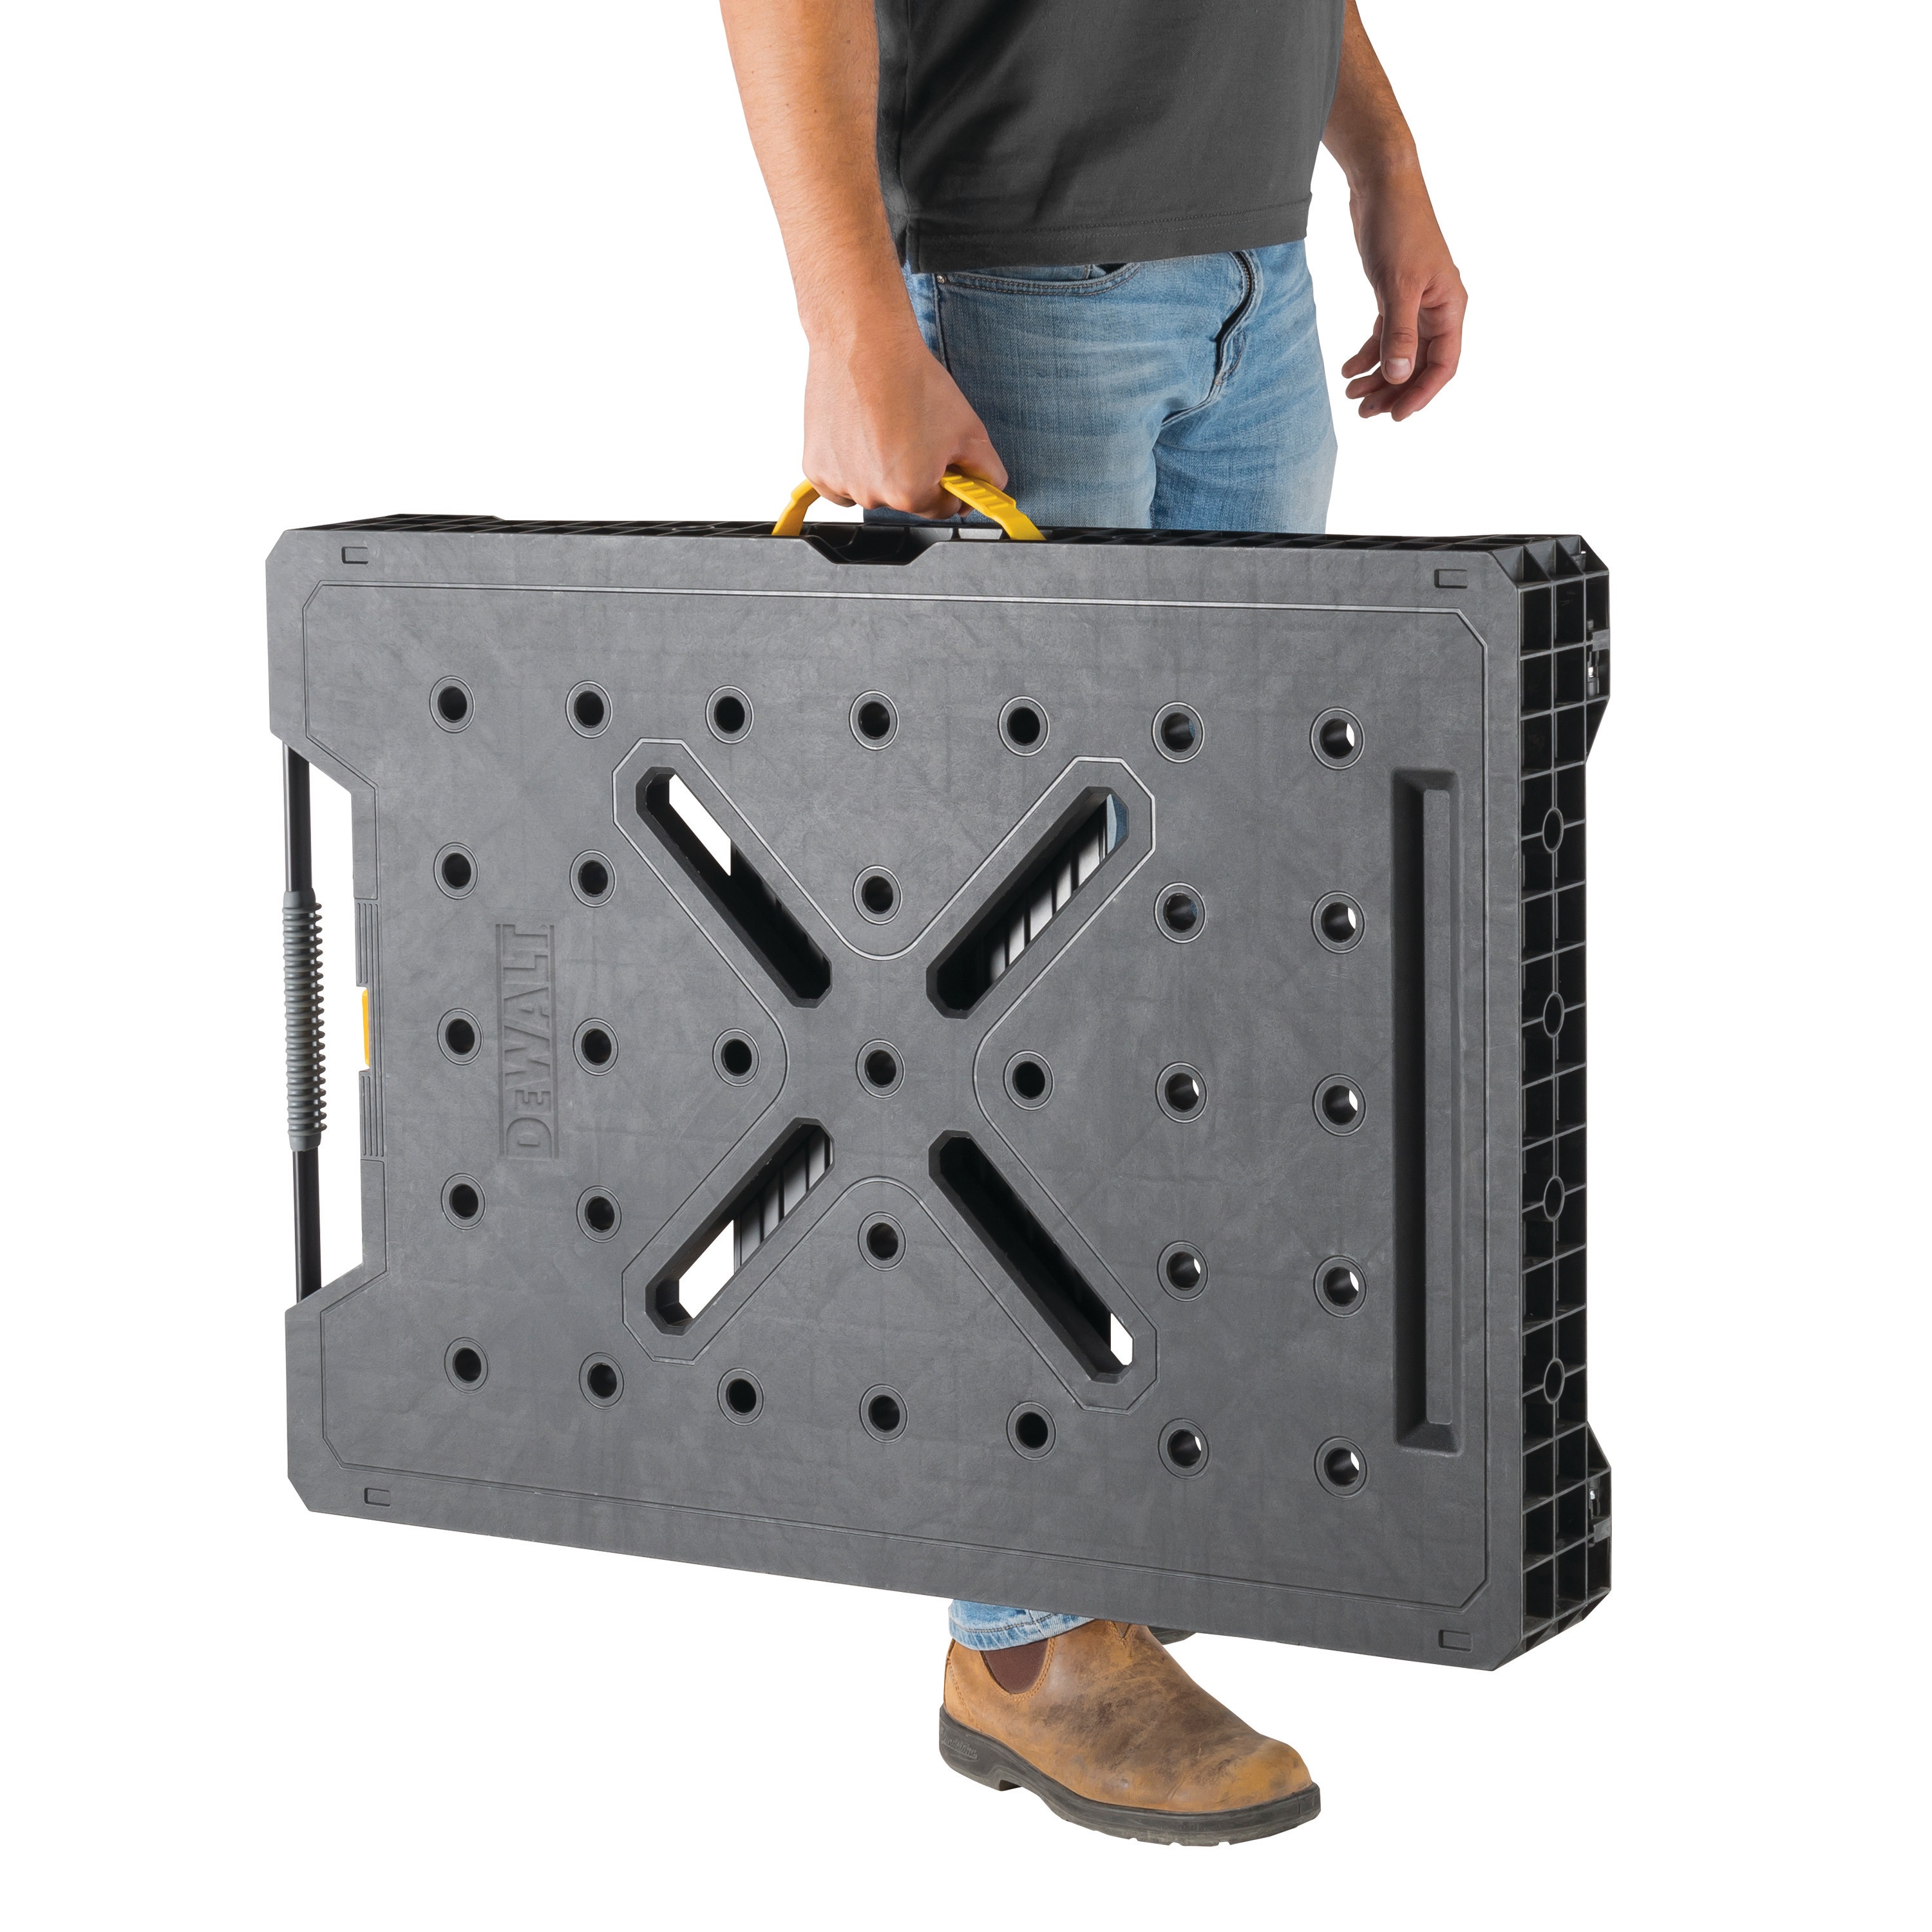 Portable feature of an express folding workbench.